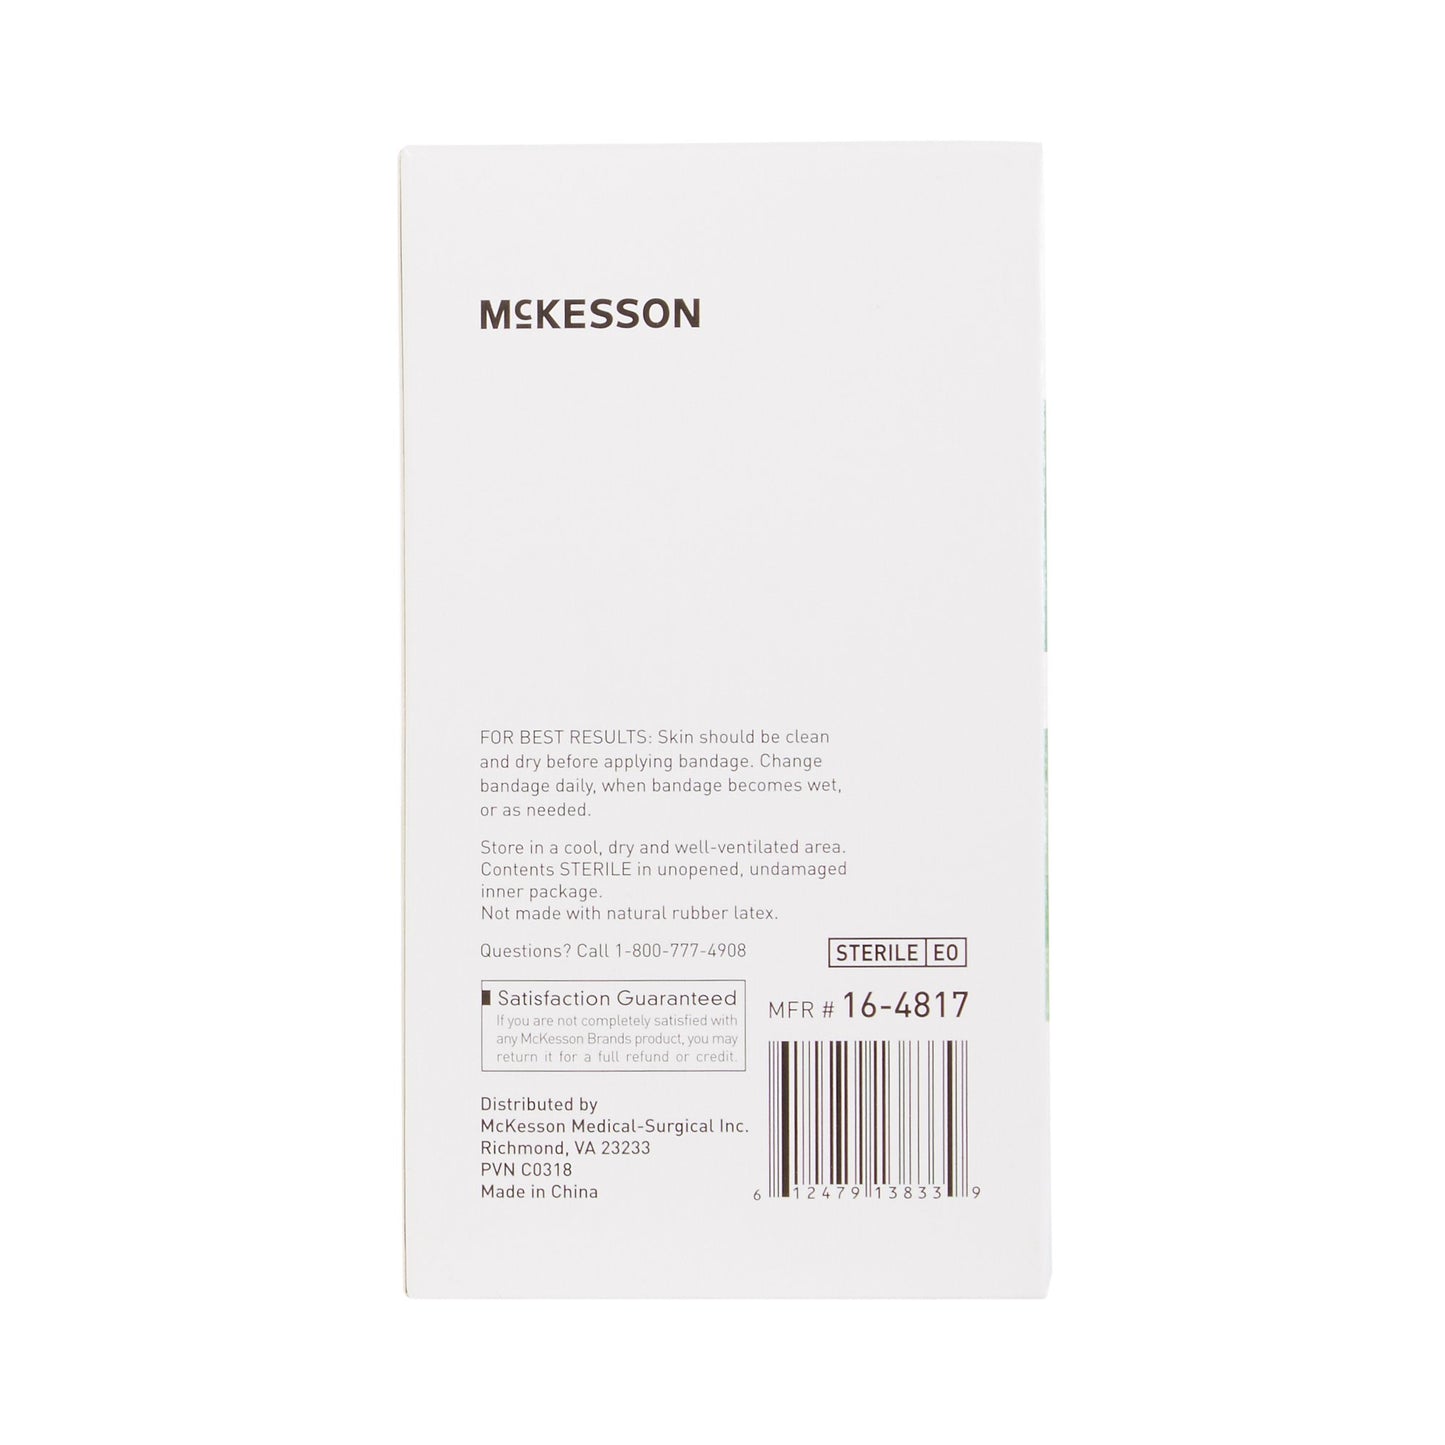 McKesson Tan Adhesive Fabric Strip, 2 x 4 Inch, 50 ct